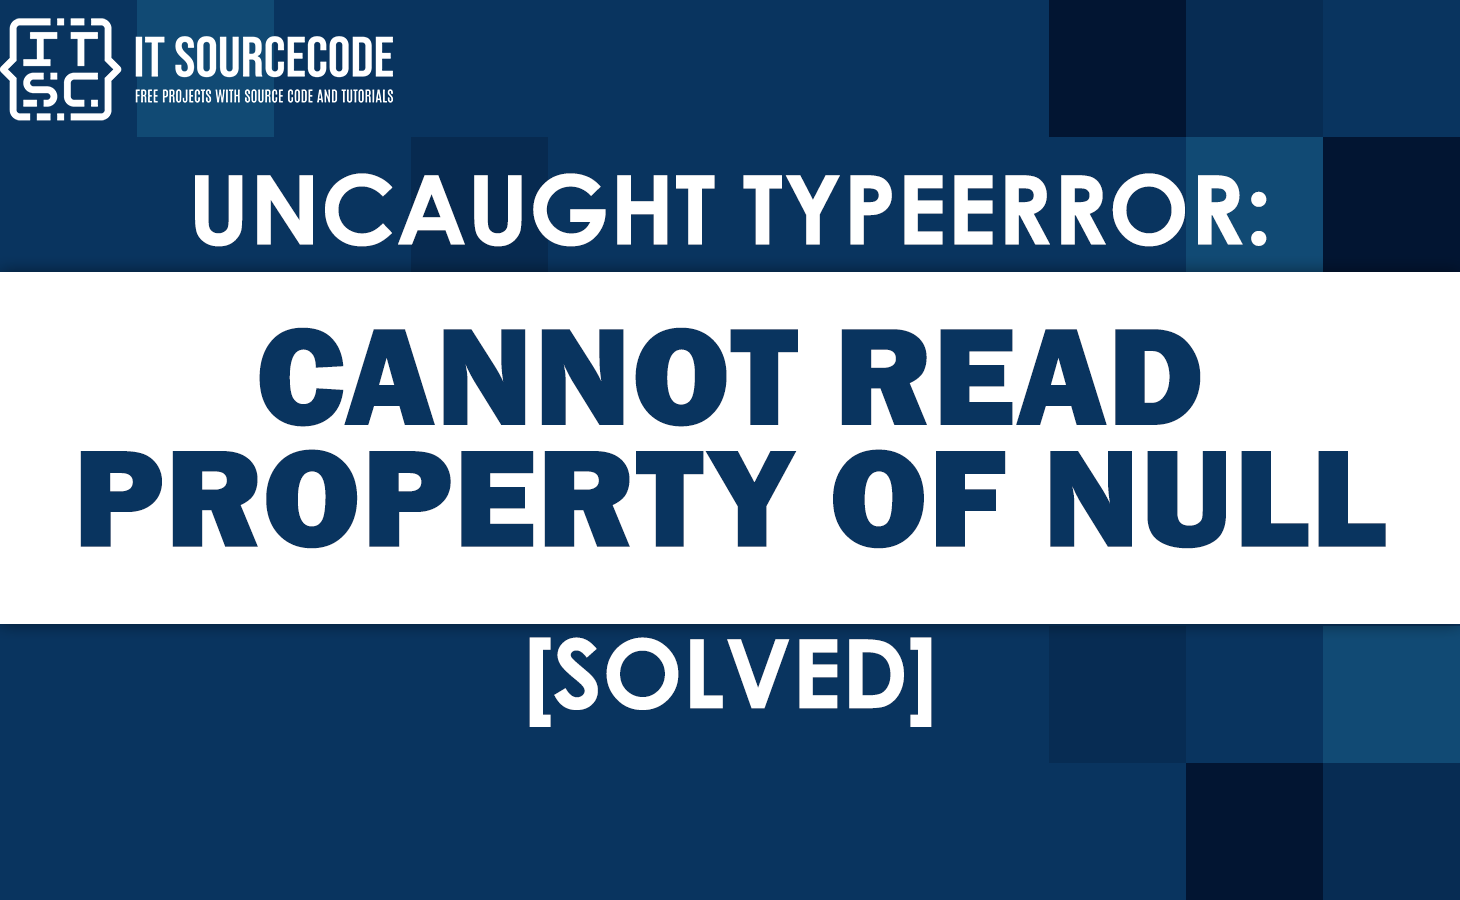 Uncaught typeerror cannot read property of null